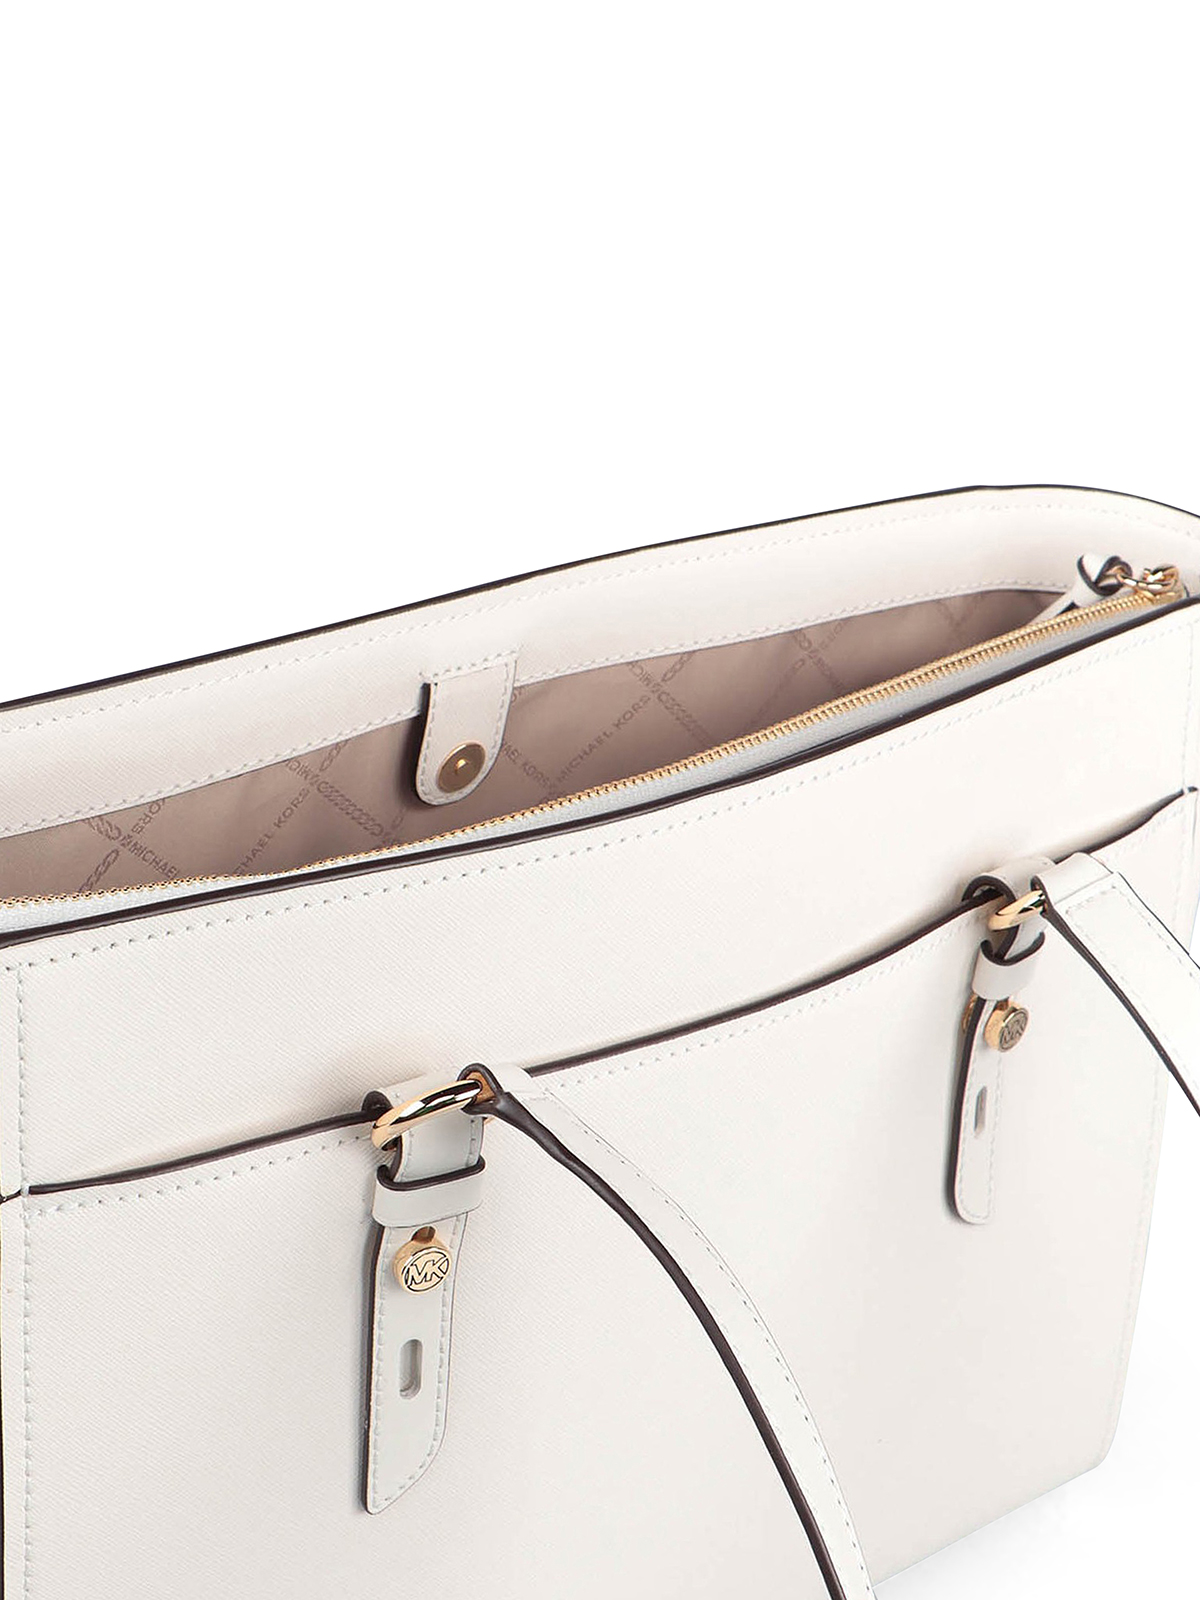 Michael Kors Sullivan Luggage Saffiano Leather Top Zip Large Tote Shoulder  Bag